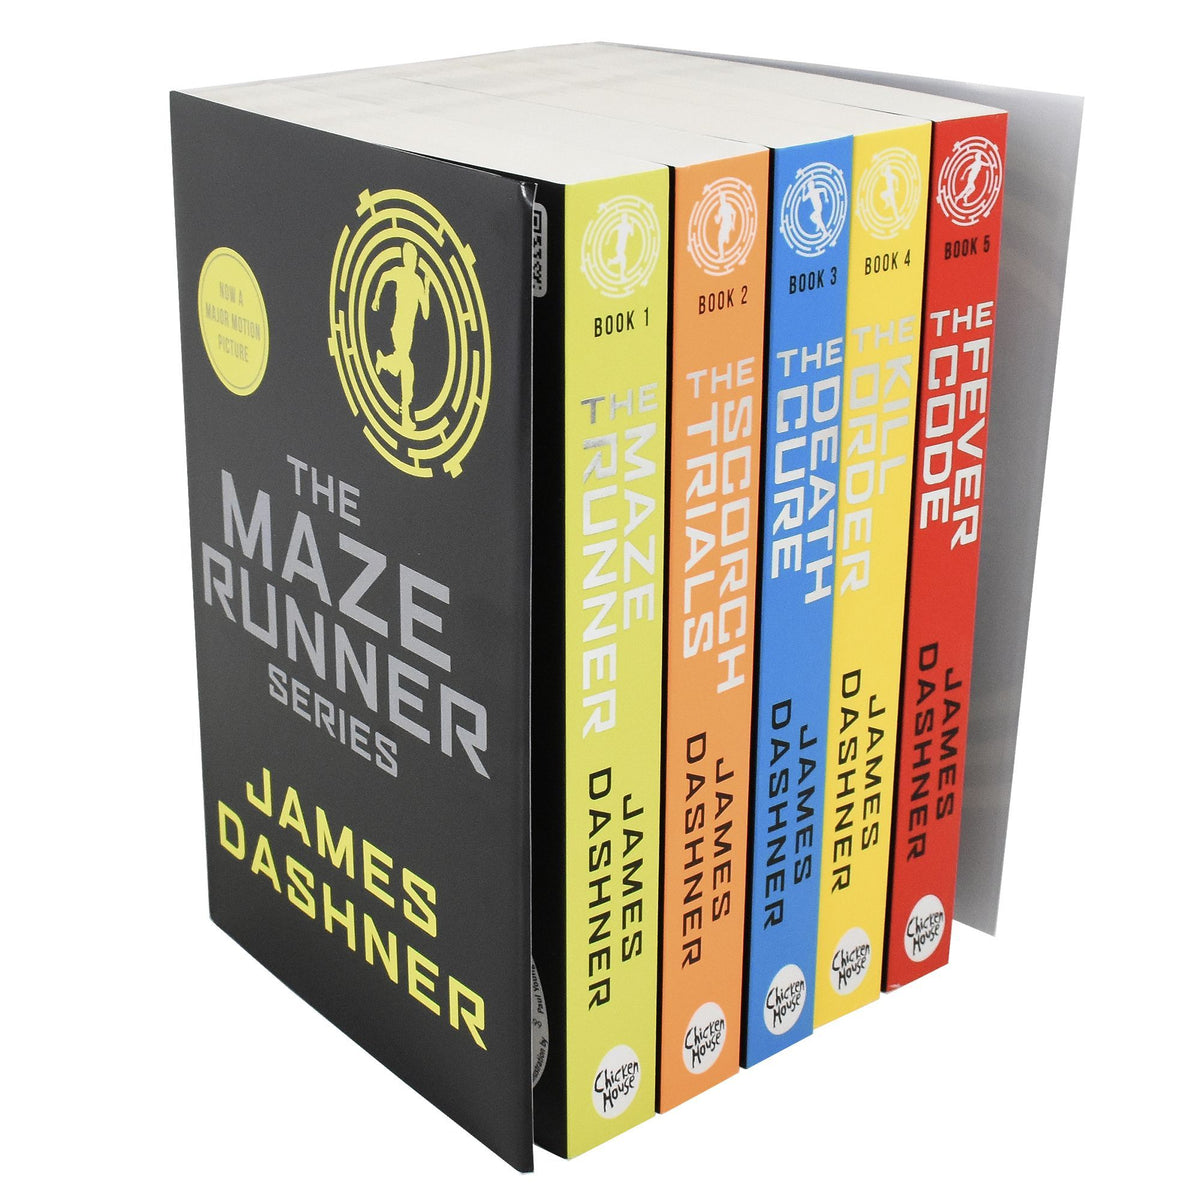 By James Dashner The Maze Runner Series (Maze Runner) (Slp)